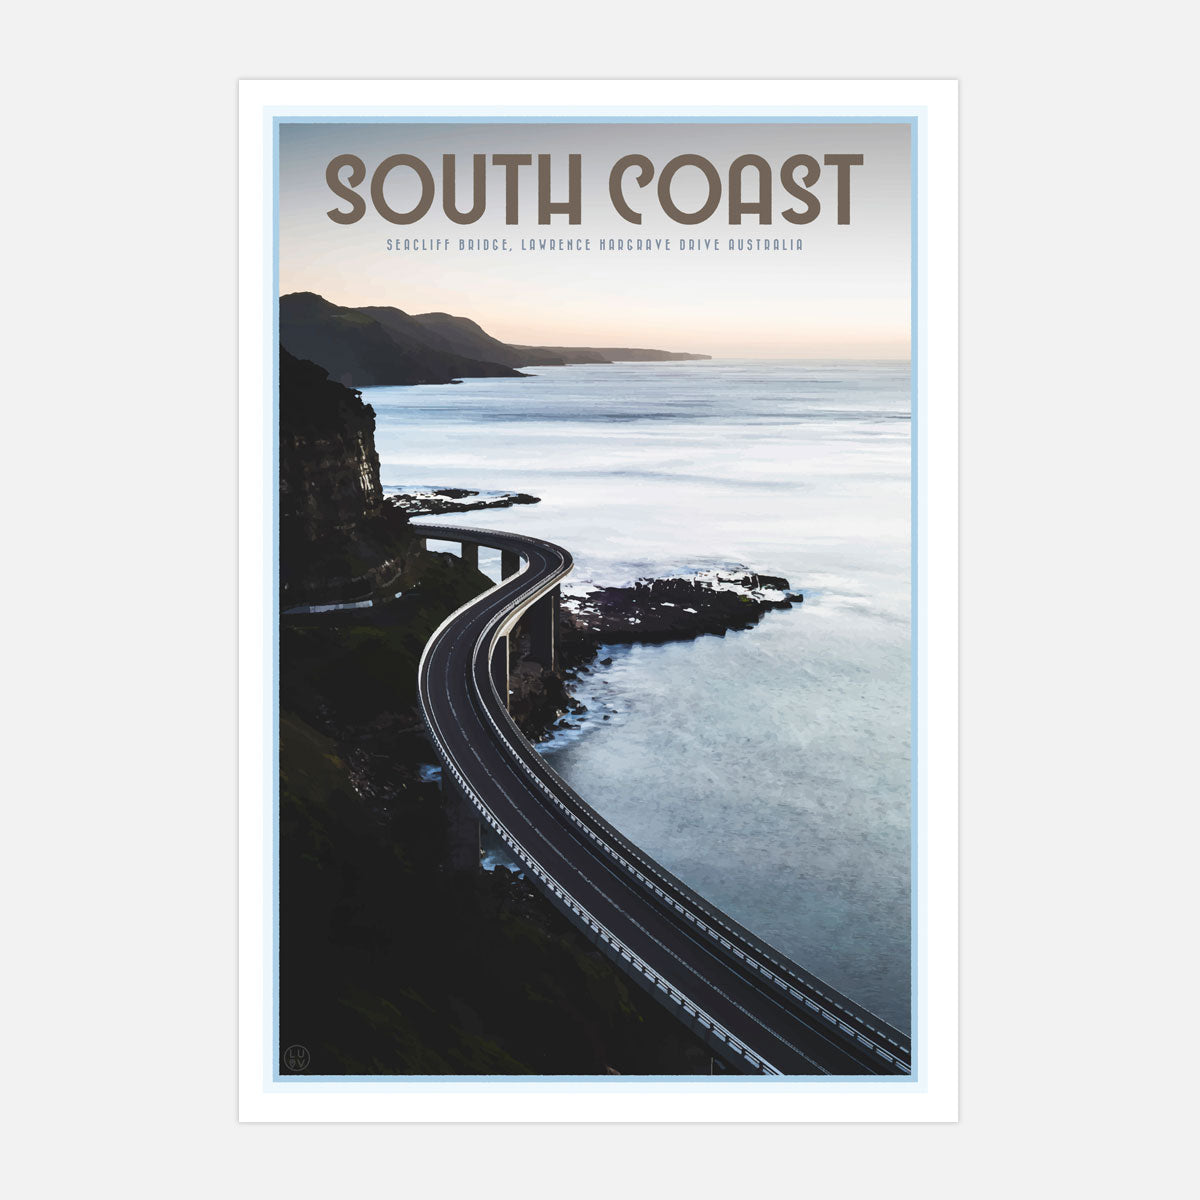 South coast seacliff bridge art print by places we luv